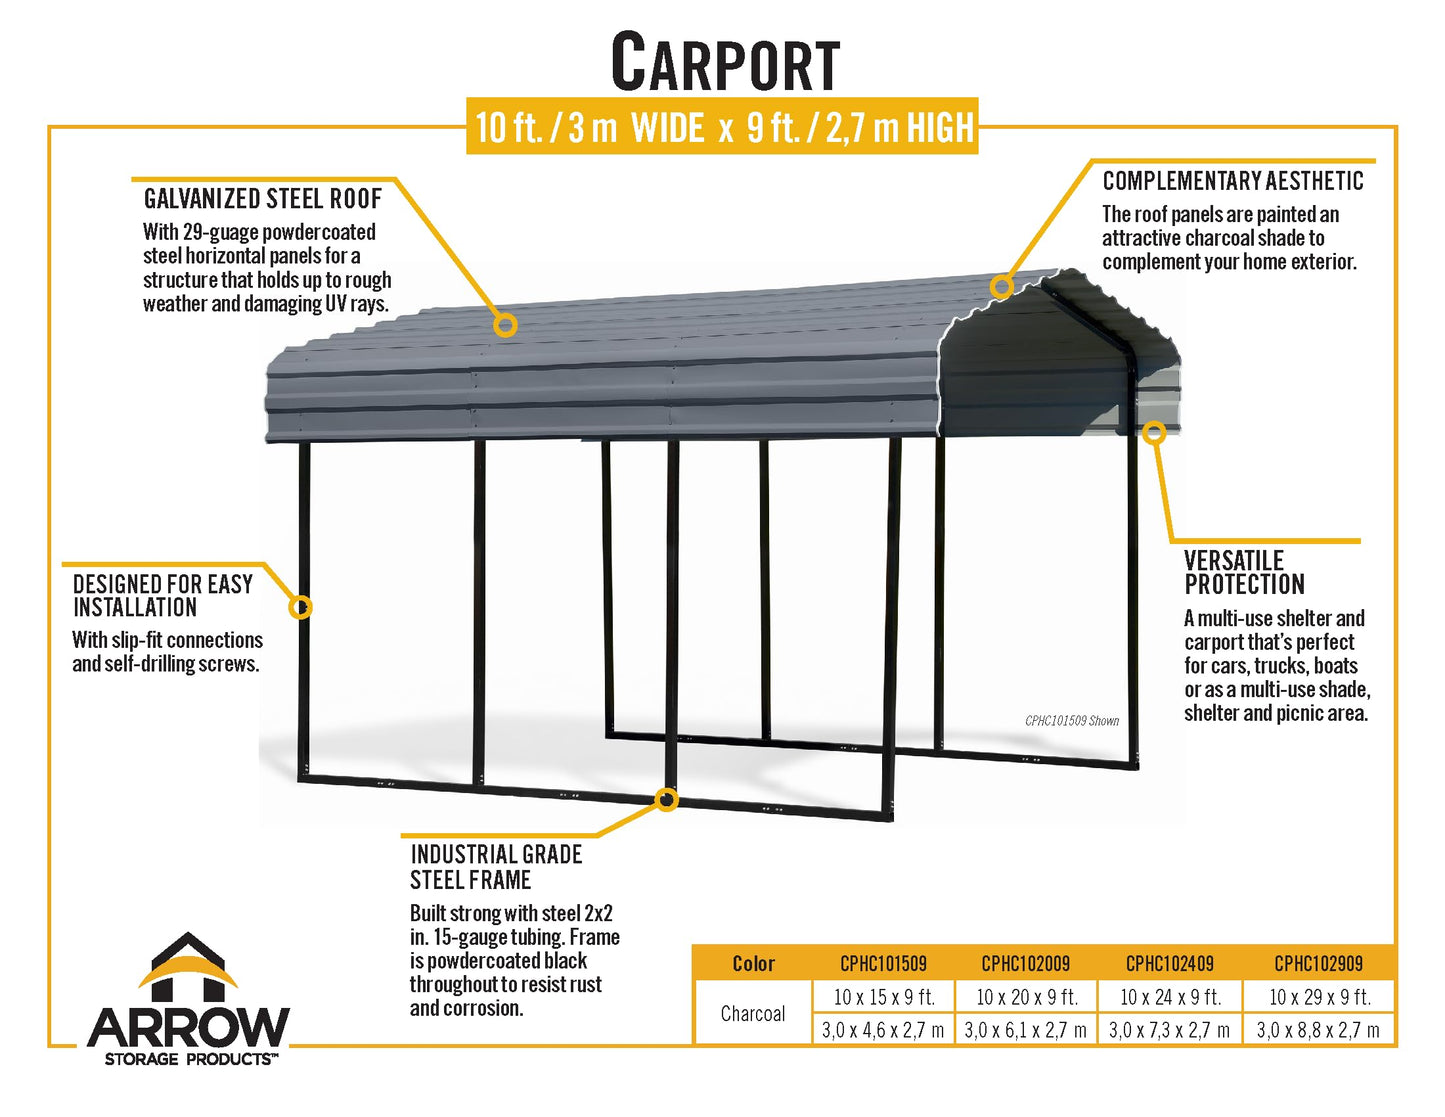 Arrow Carport, 10 ft. x 29 ft. x 9 ft. Charcoal 10' x 29' x 9'